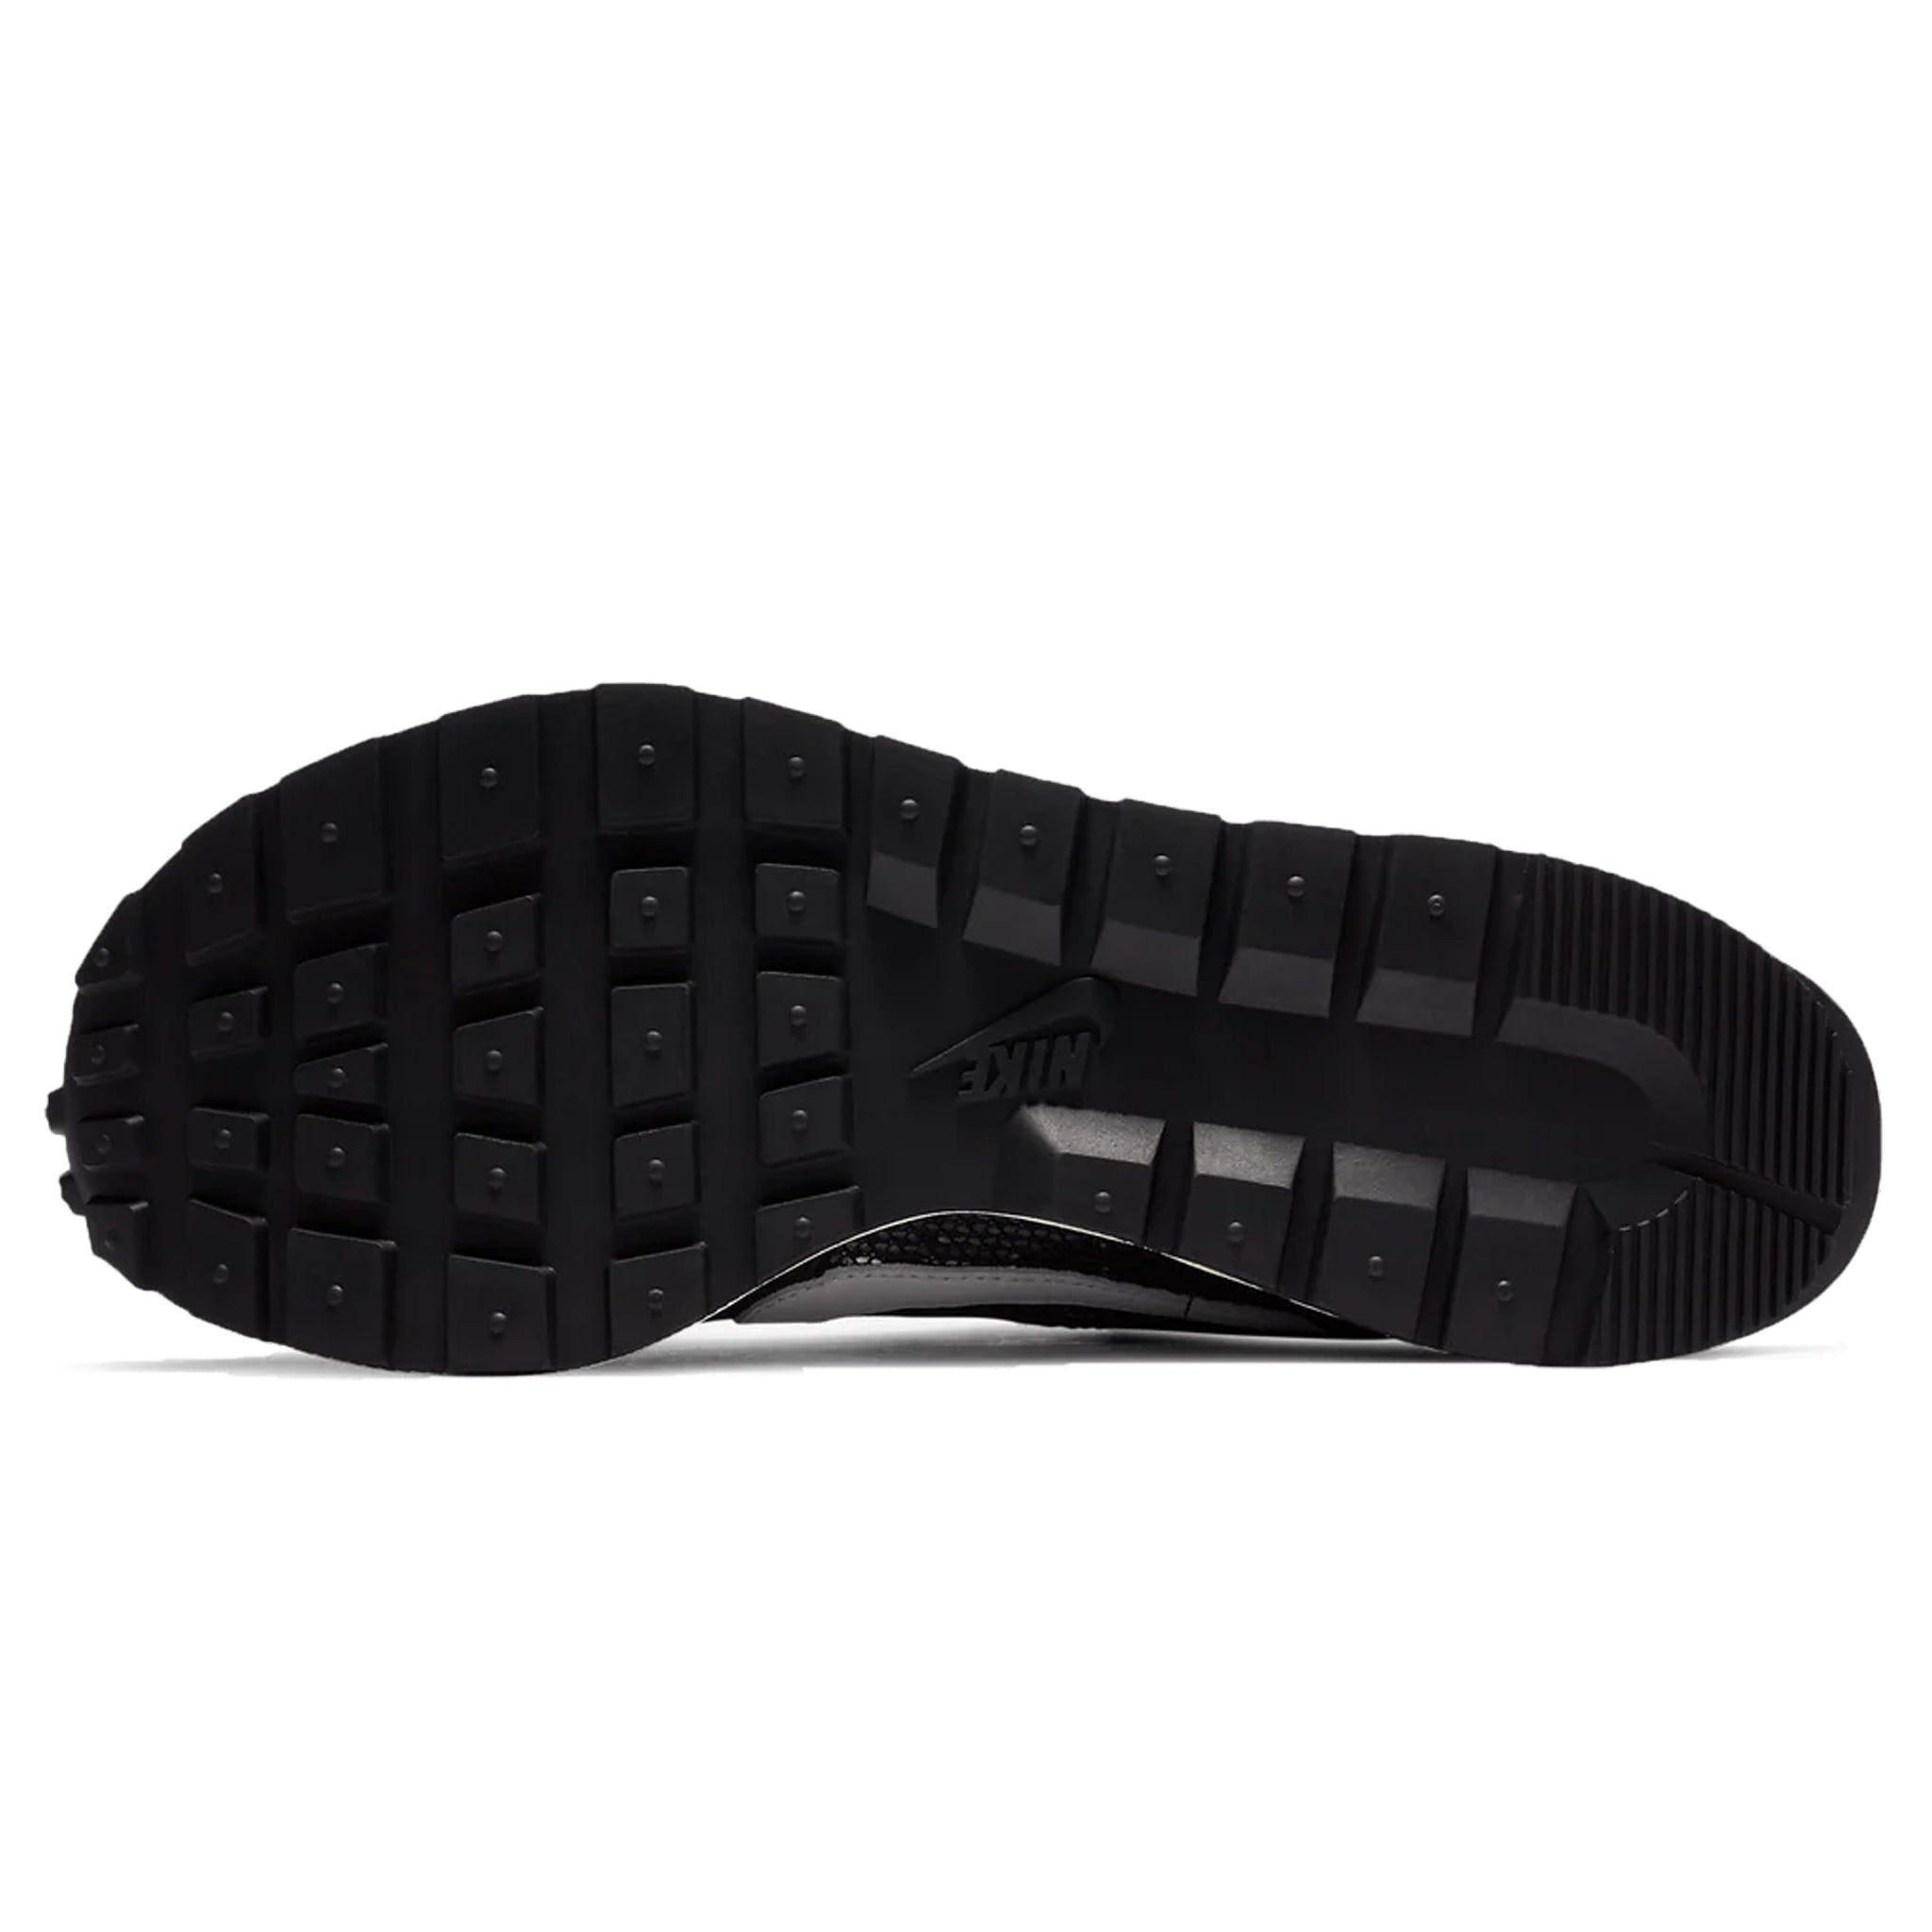 Sole view of Nike x Sacai Vaporwaffle Black White Sneaker CV1363-001